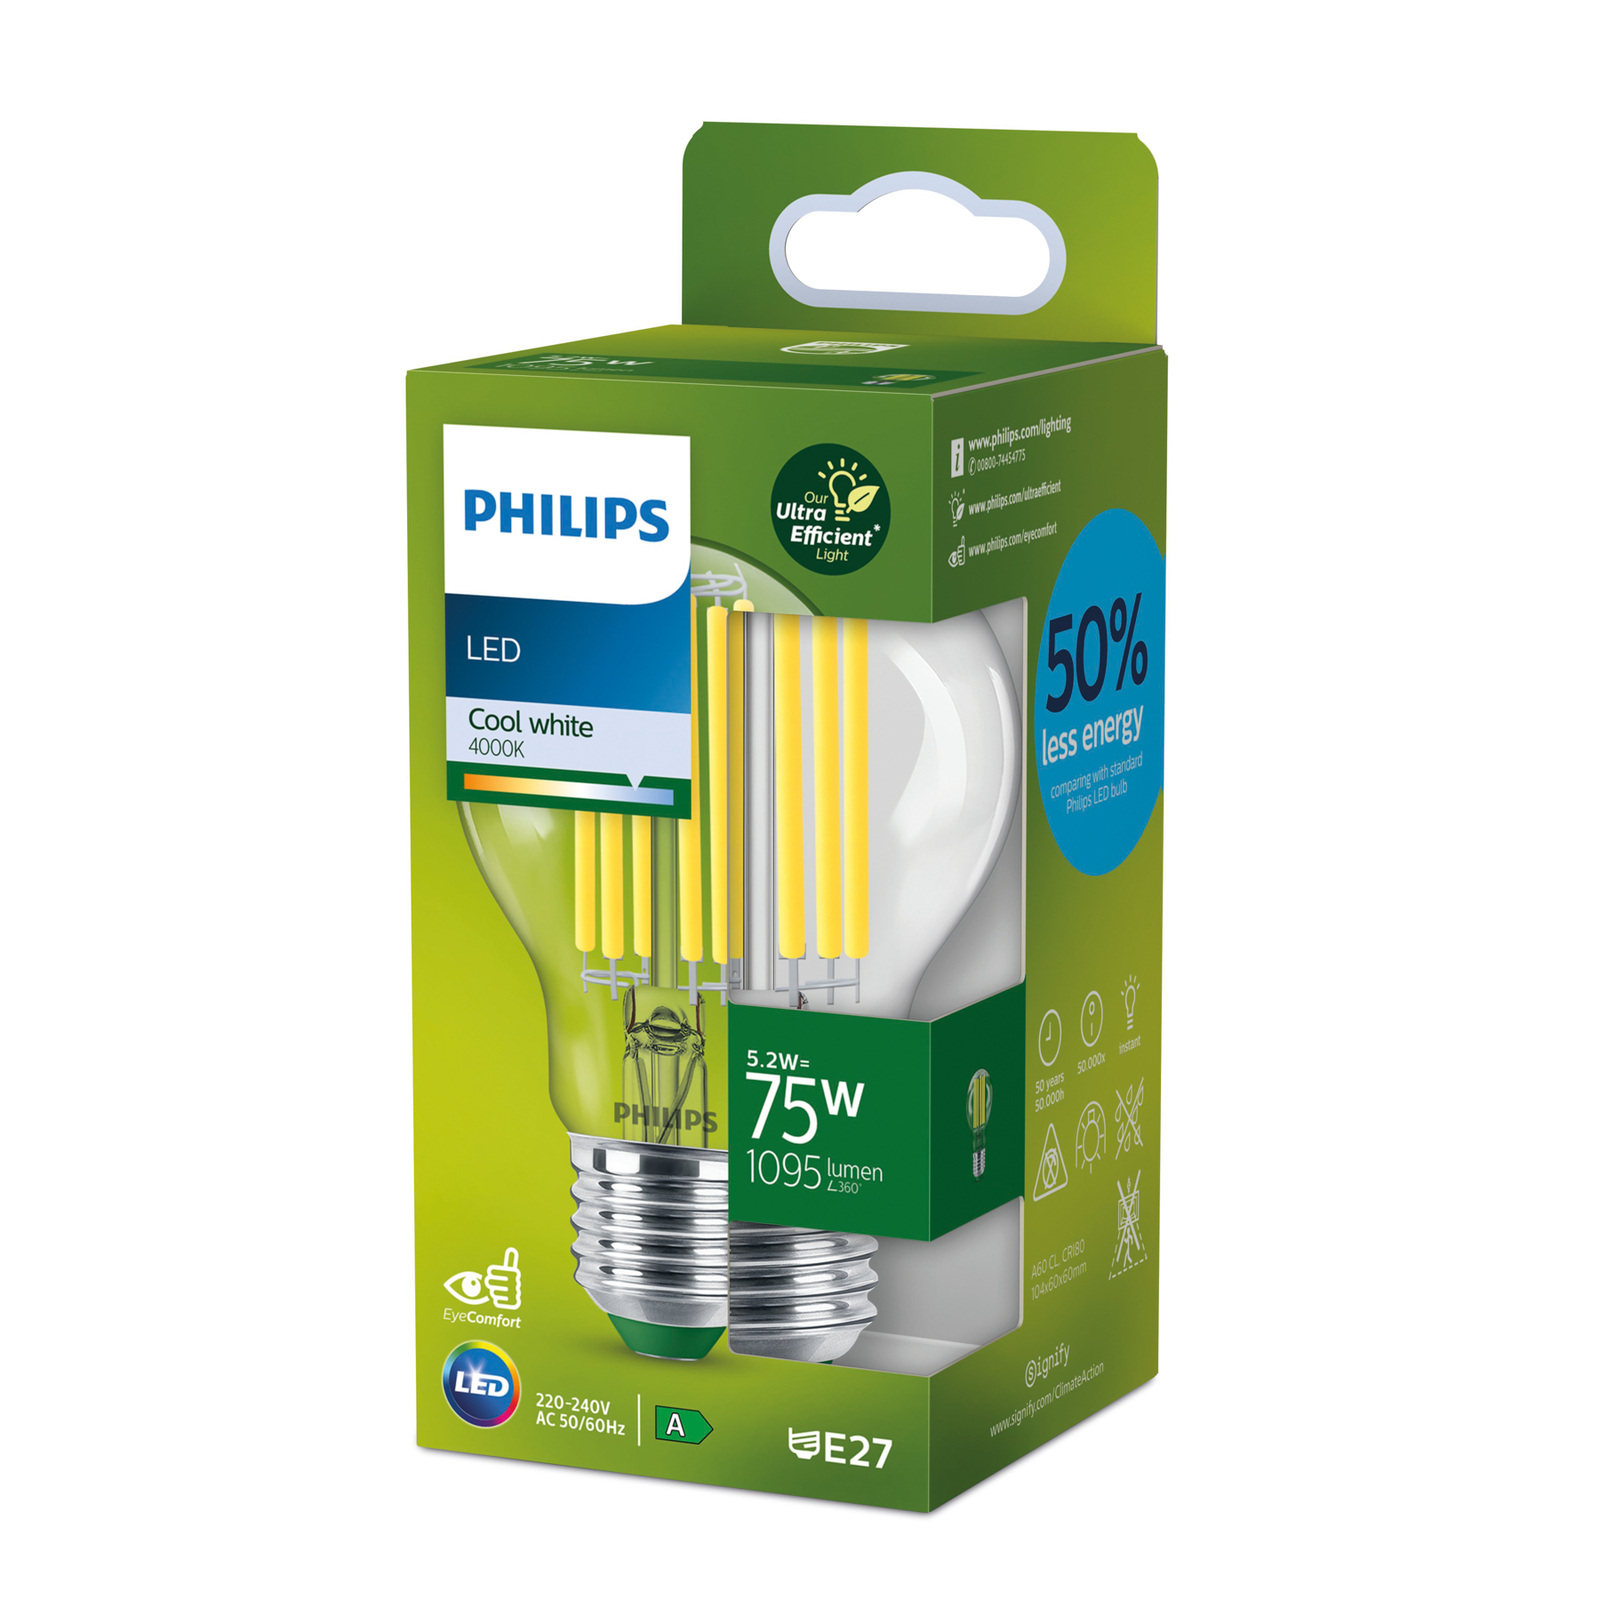 Philips E27 LED žárovka A60 5,2W 1095lm 4000K čirá